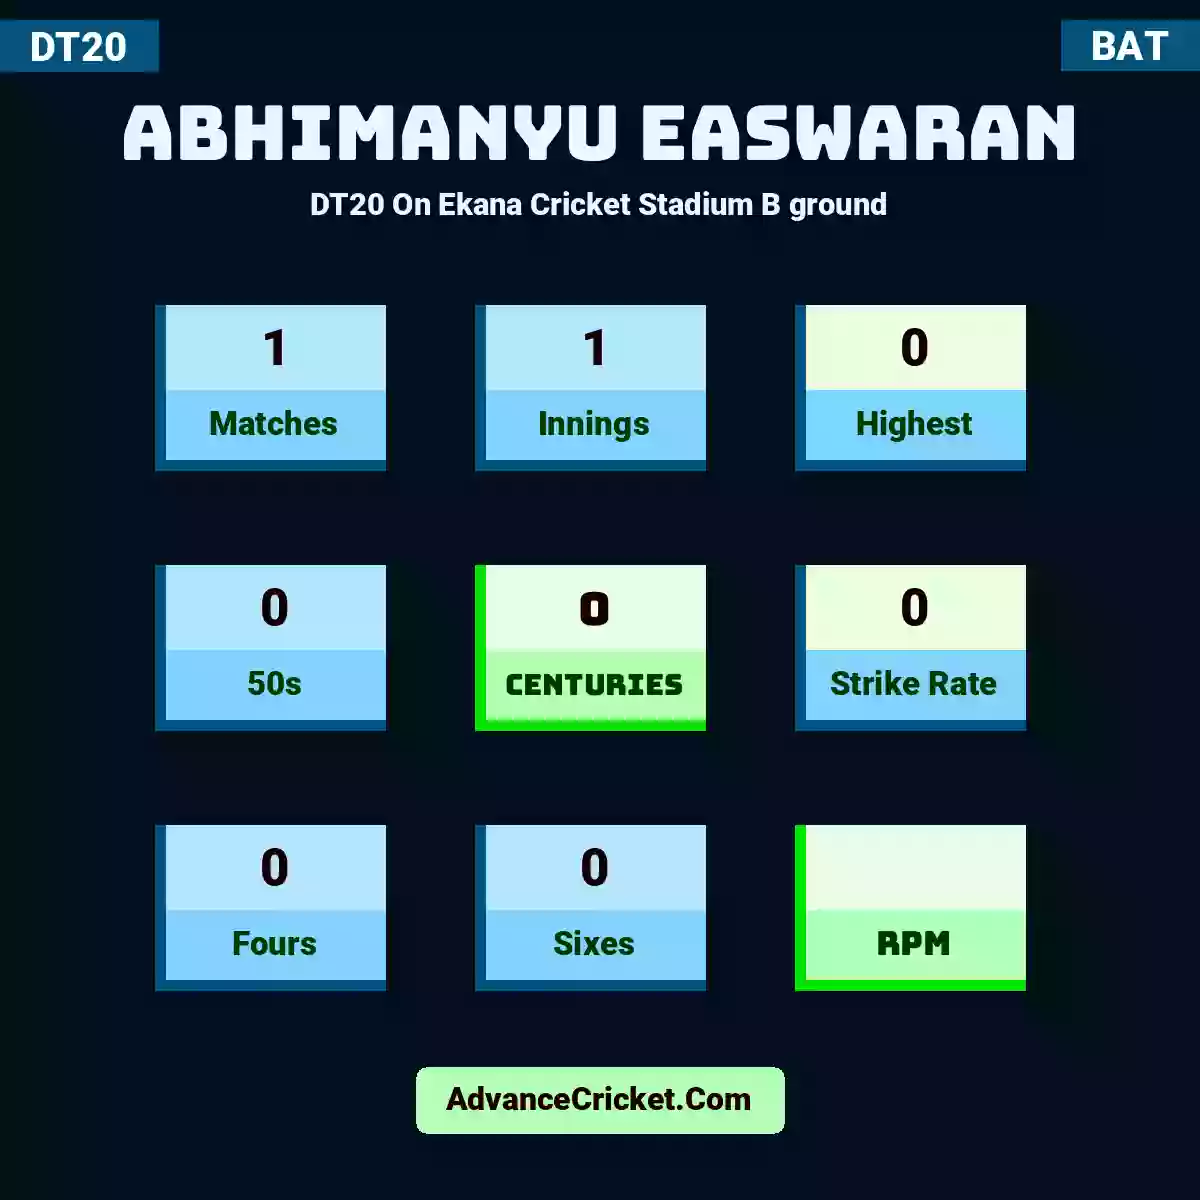 Abhimanyu Easwaran DT20  On Ekana Cricket Stadium B ground, Abhimanyu Easwaran played 1 matches, scored 0 runs as highest, 0 half-centuries, and 0 centuries, with a strike rate of 0. A.Easwaran hit 0 fours and 0 sixes.